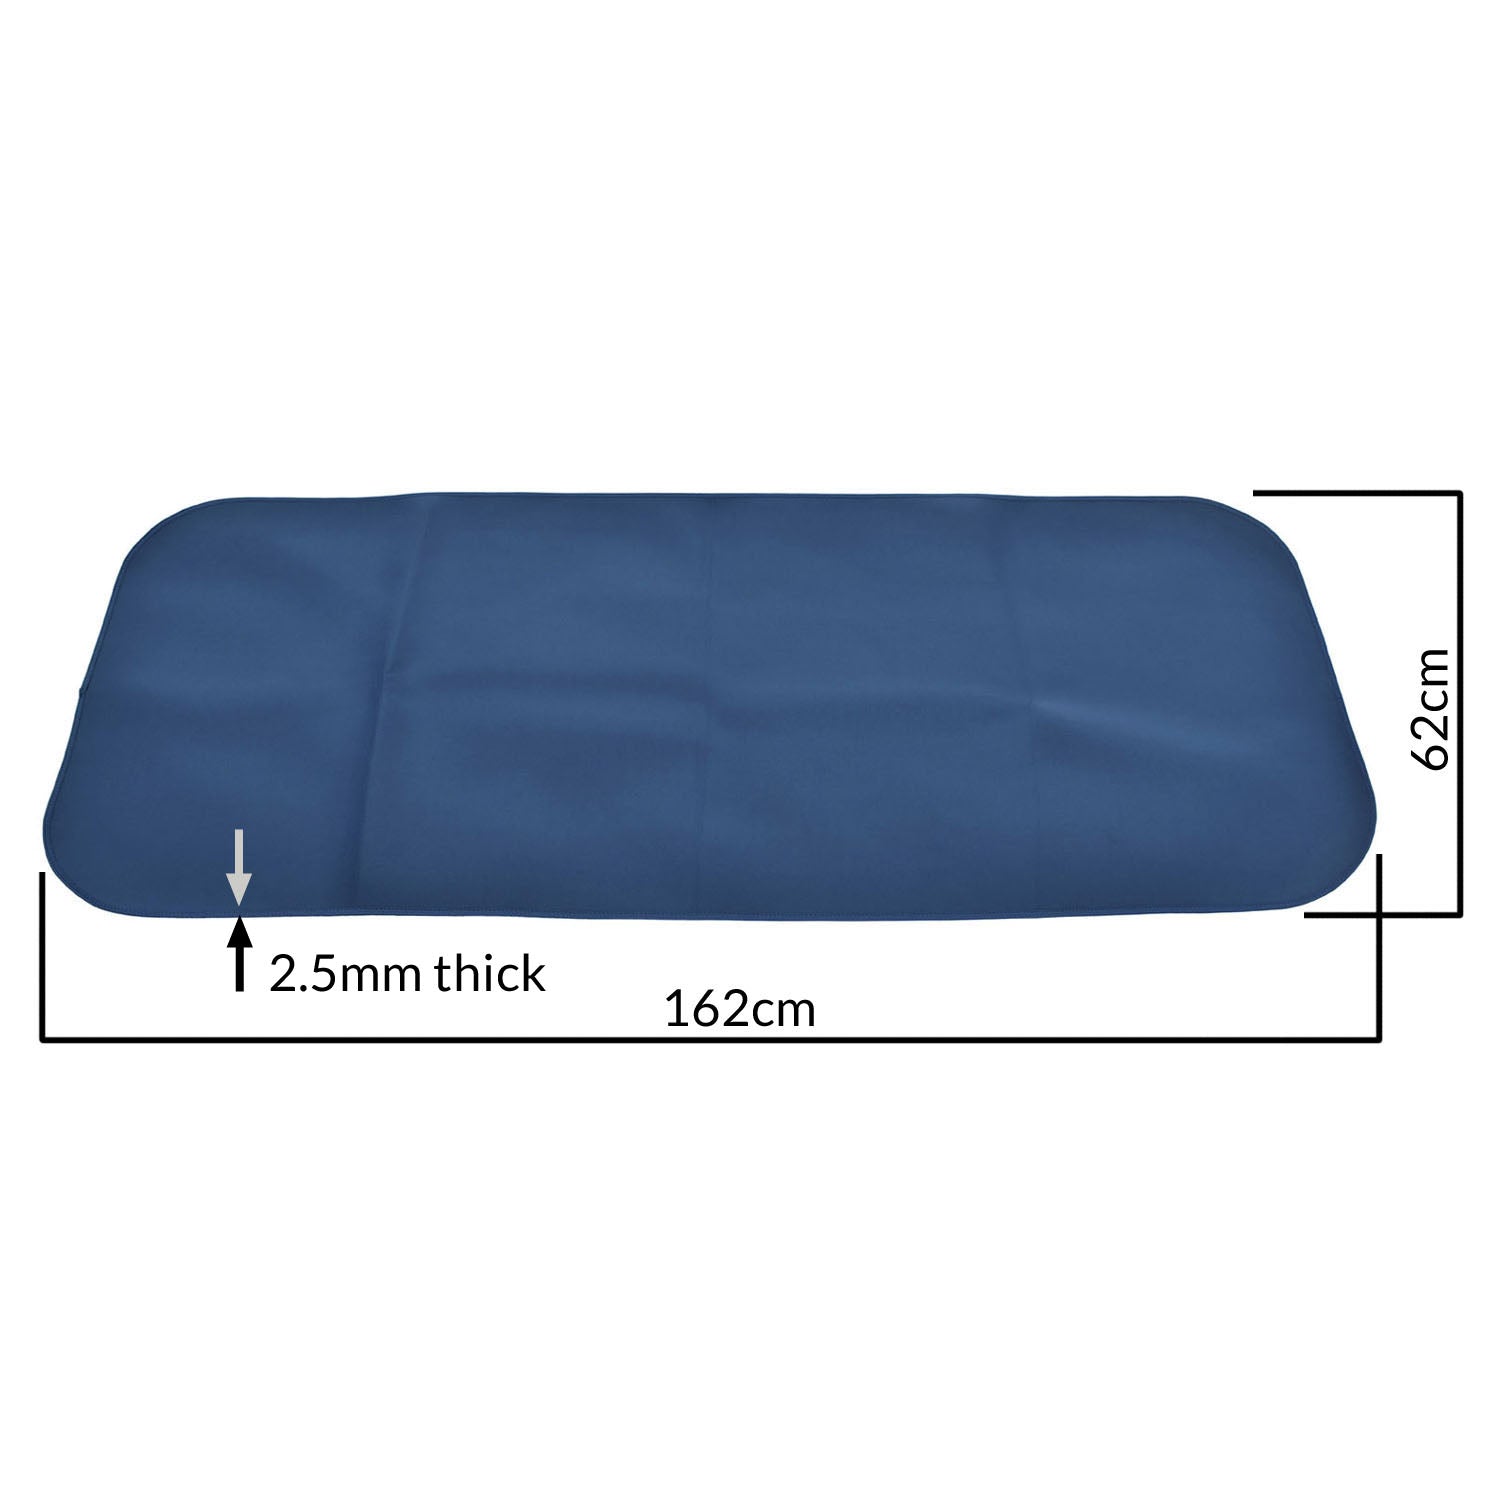 Adult Changing Mat and Waterproof Bag Set - Steel Blue/Black (UK VAT Exempt)